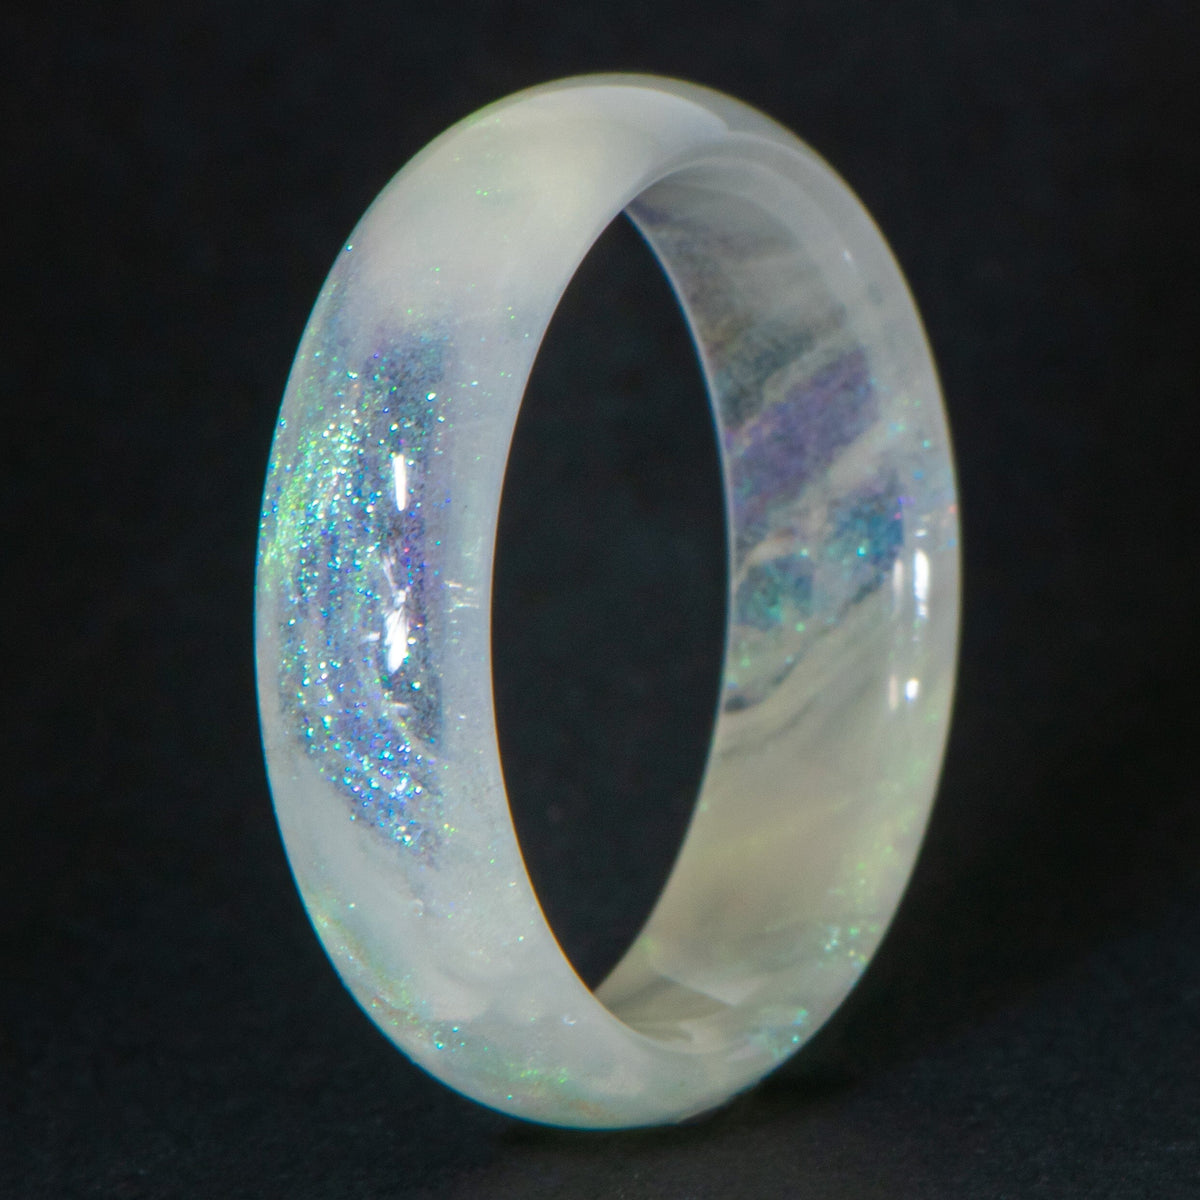 Radius ring made from iridescent resin. 